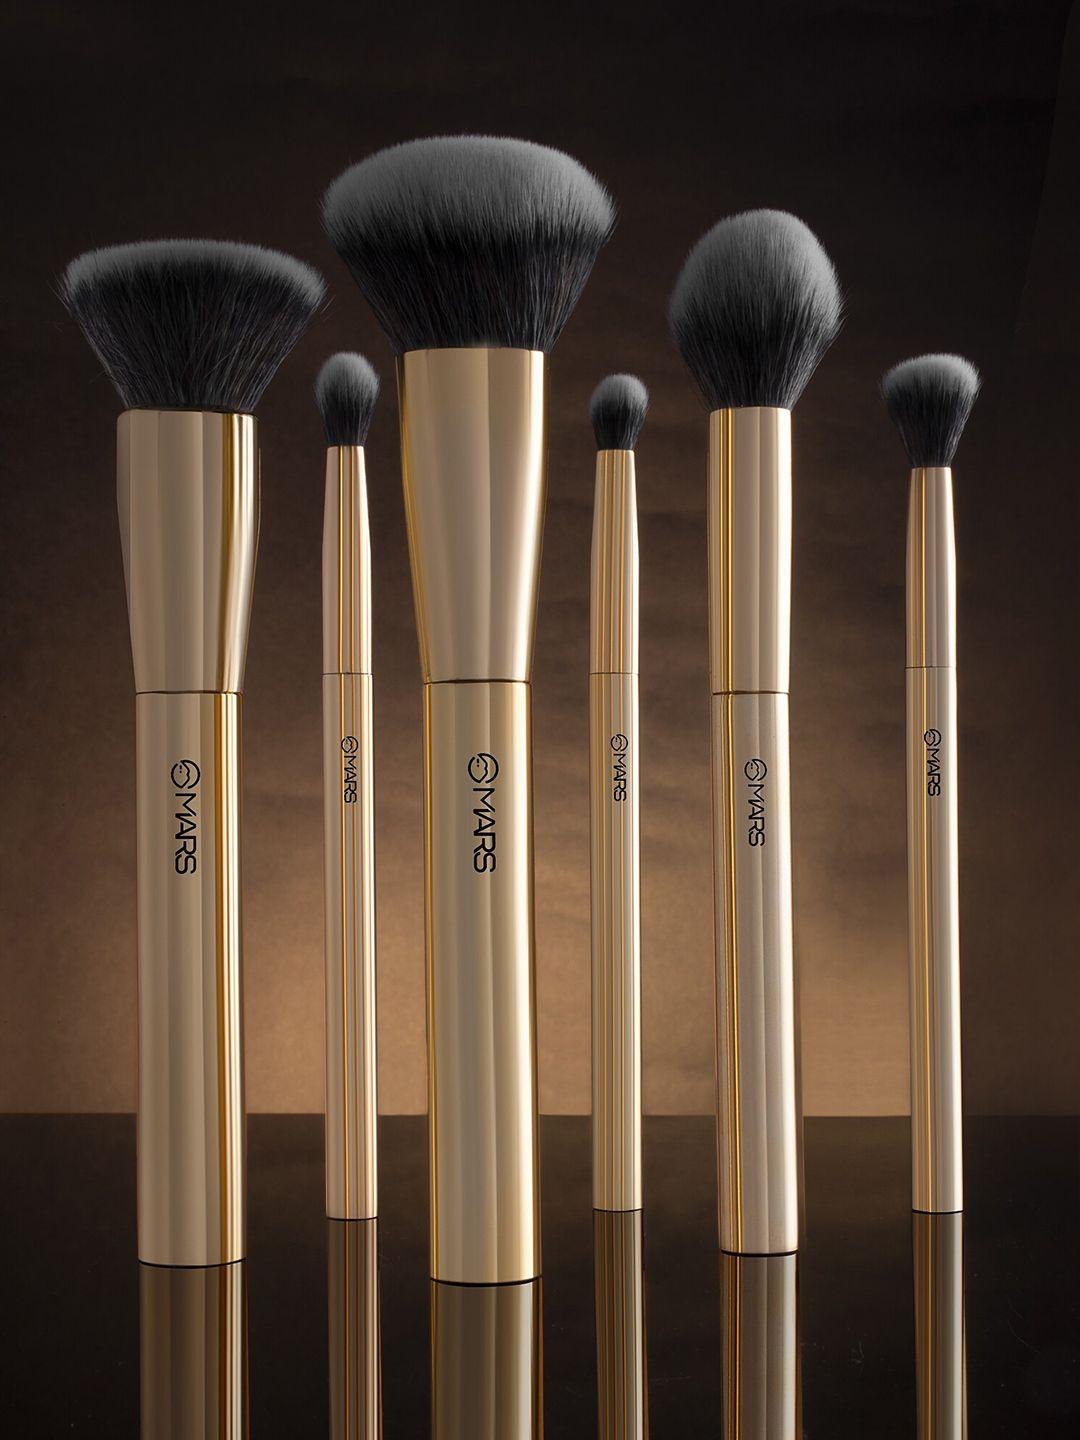 mars set of 6 artist's arsenal makeup brushes